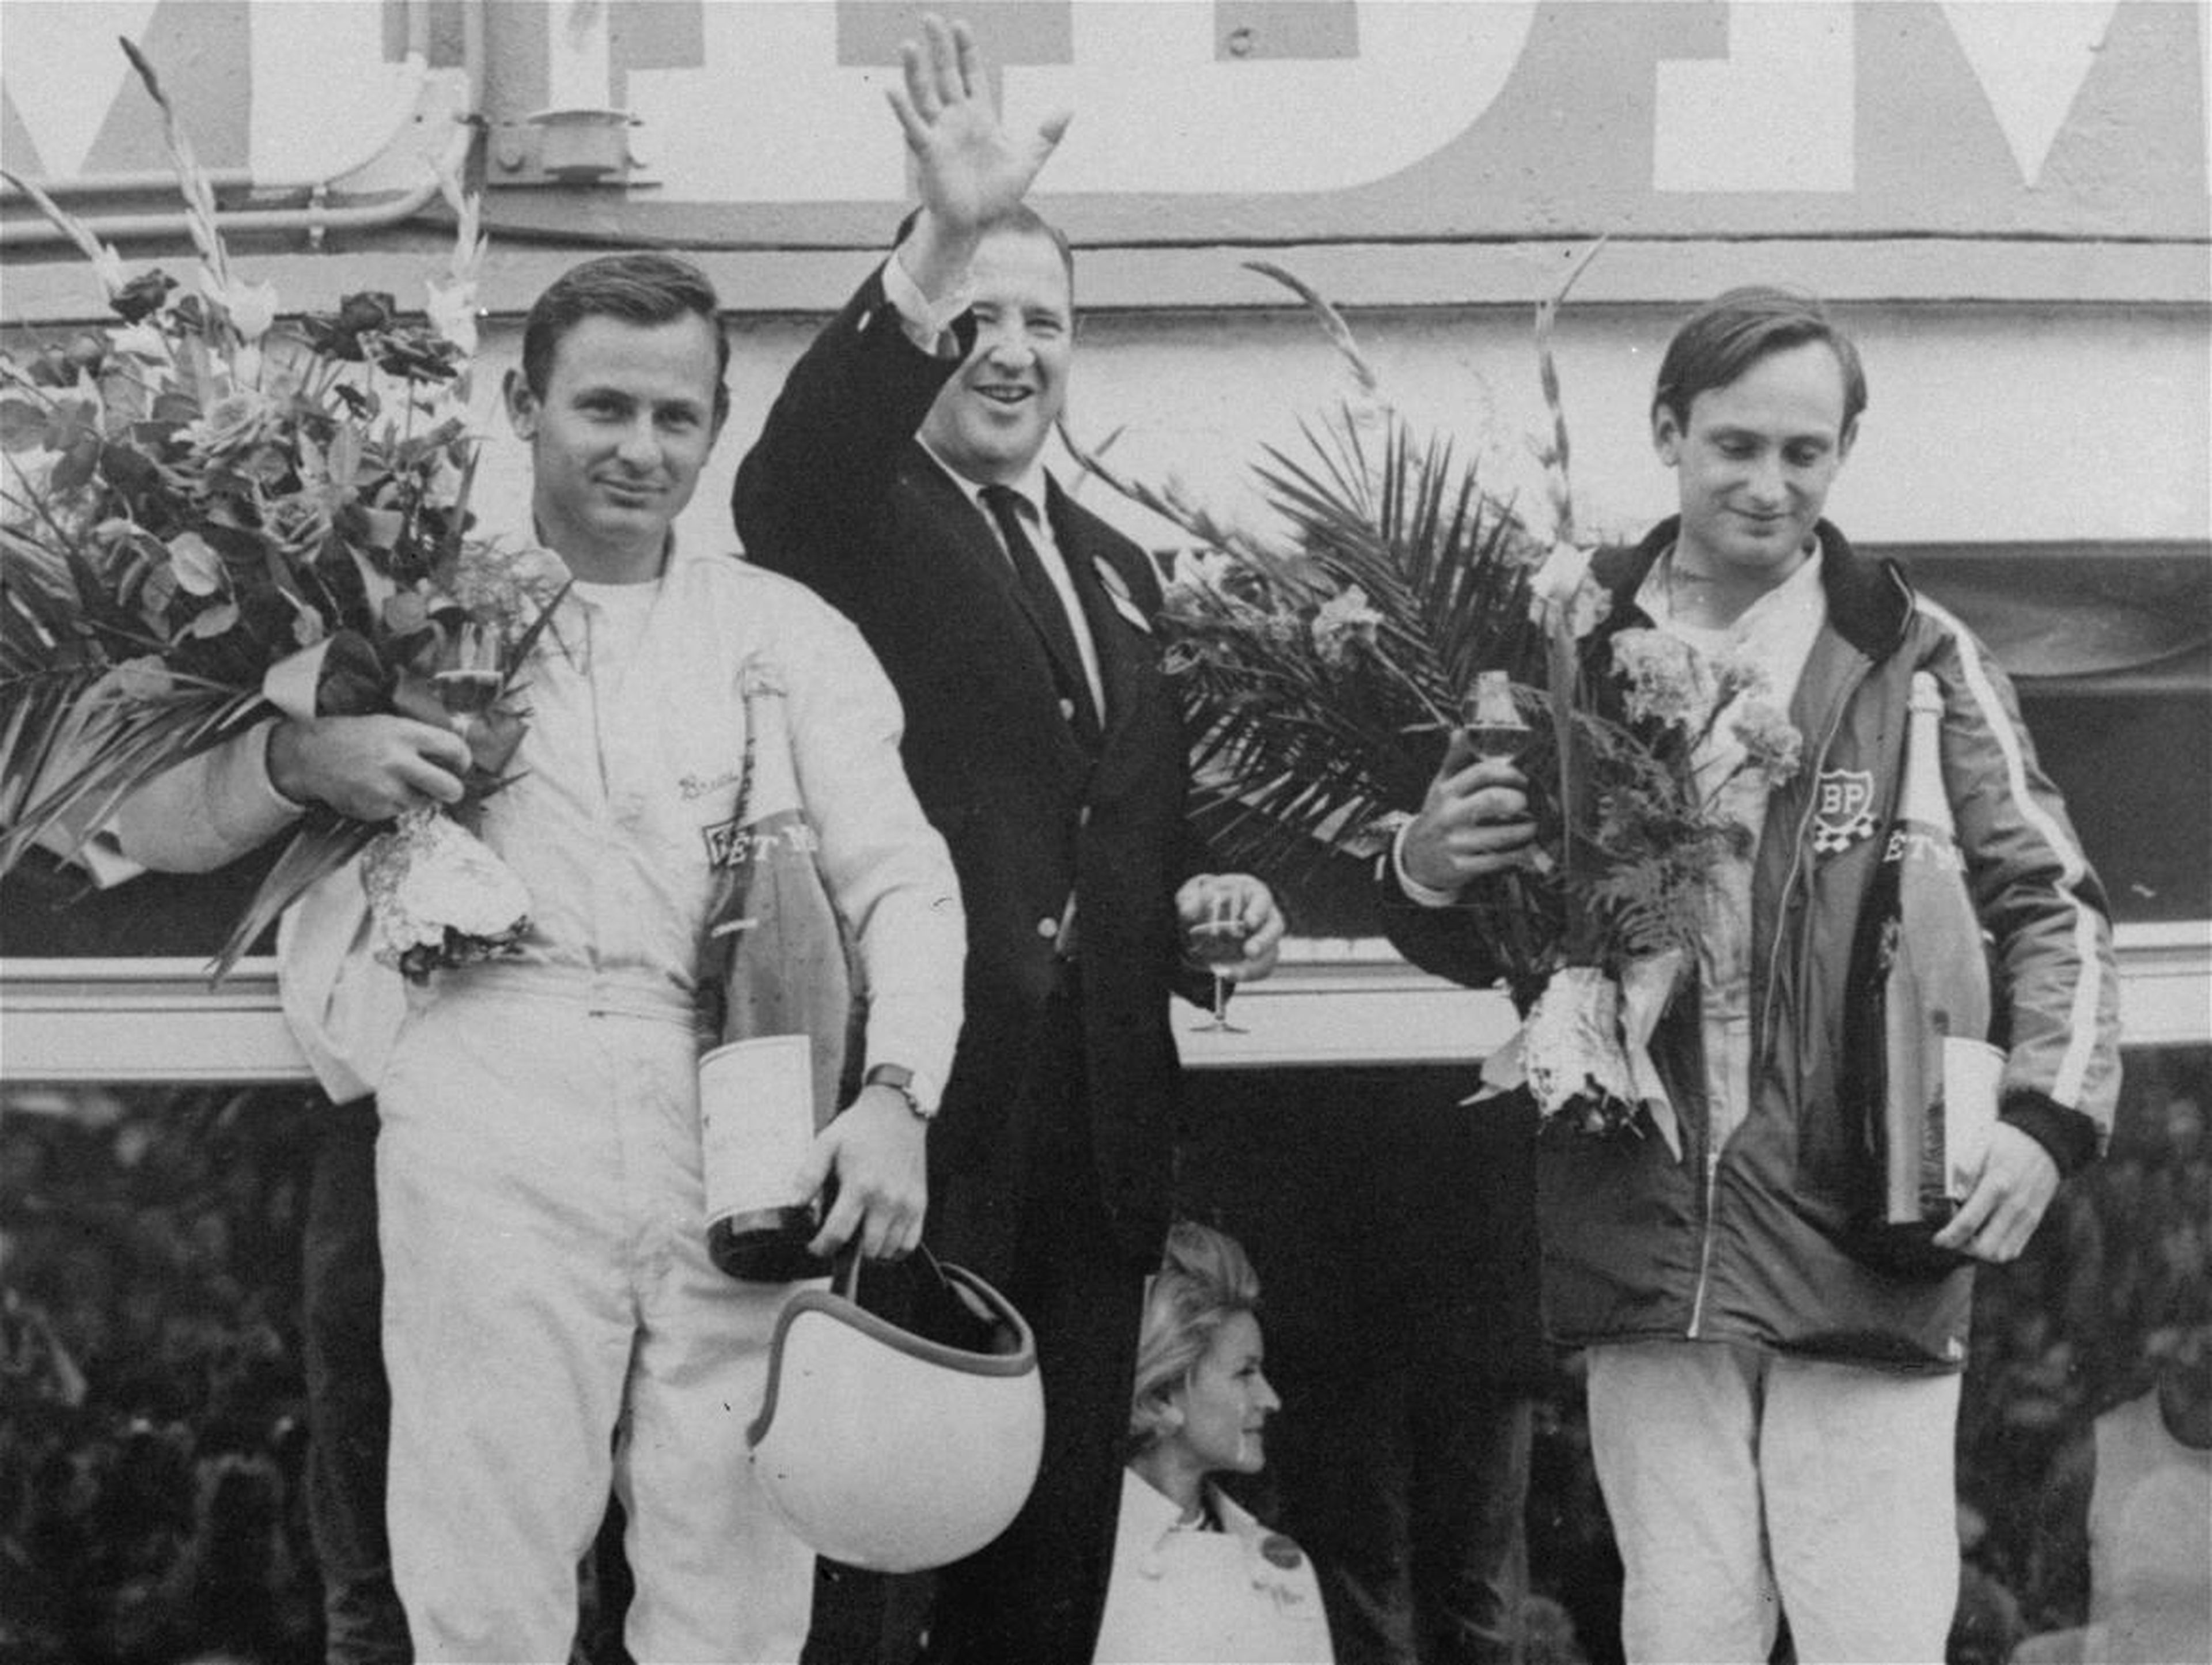 Henry Ford II got his revenge. The GT40 won Le Mans with a stunning 1-2-3 finish, ending Ferrari's dominance.